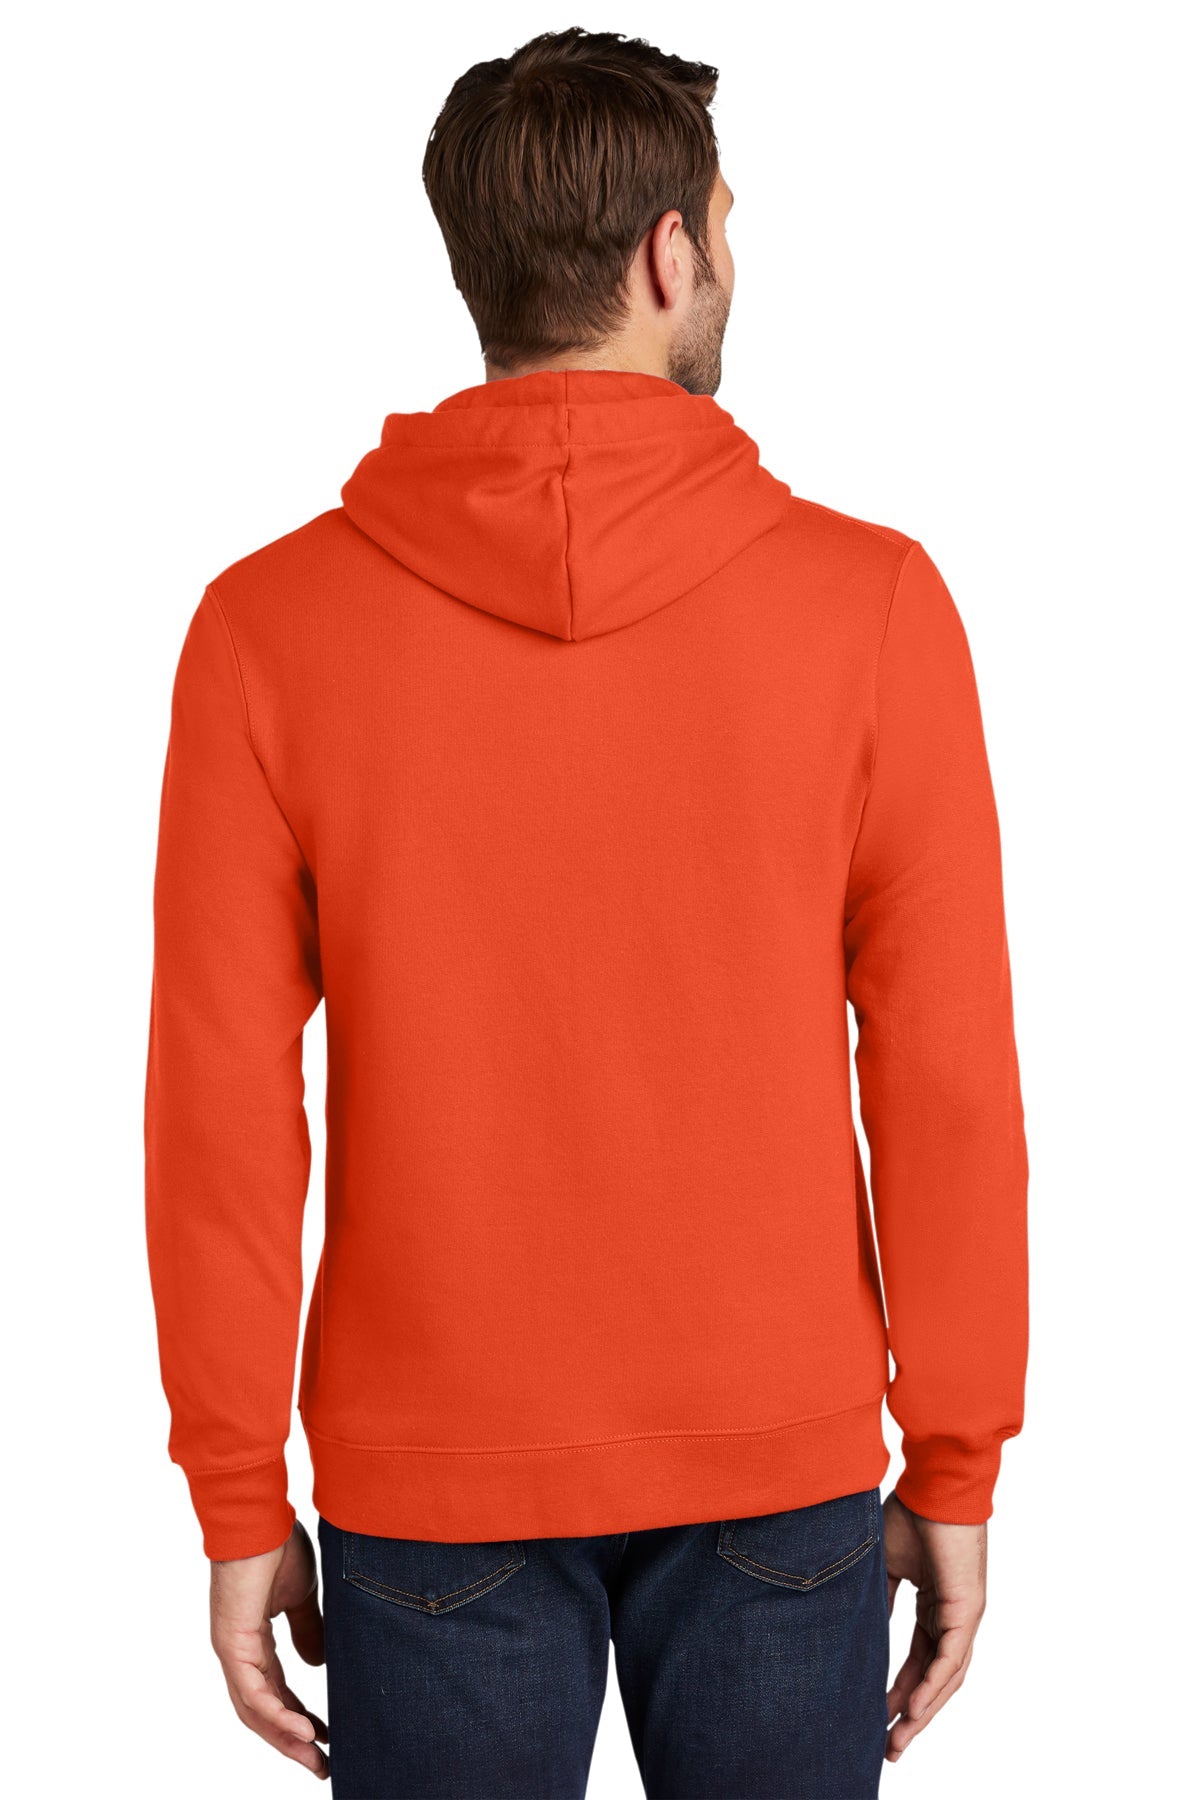 port & company_pc850h _orange_company_logo_sweatshirts